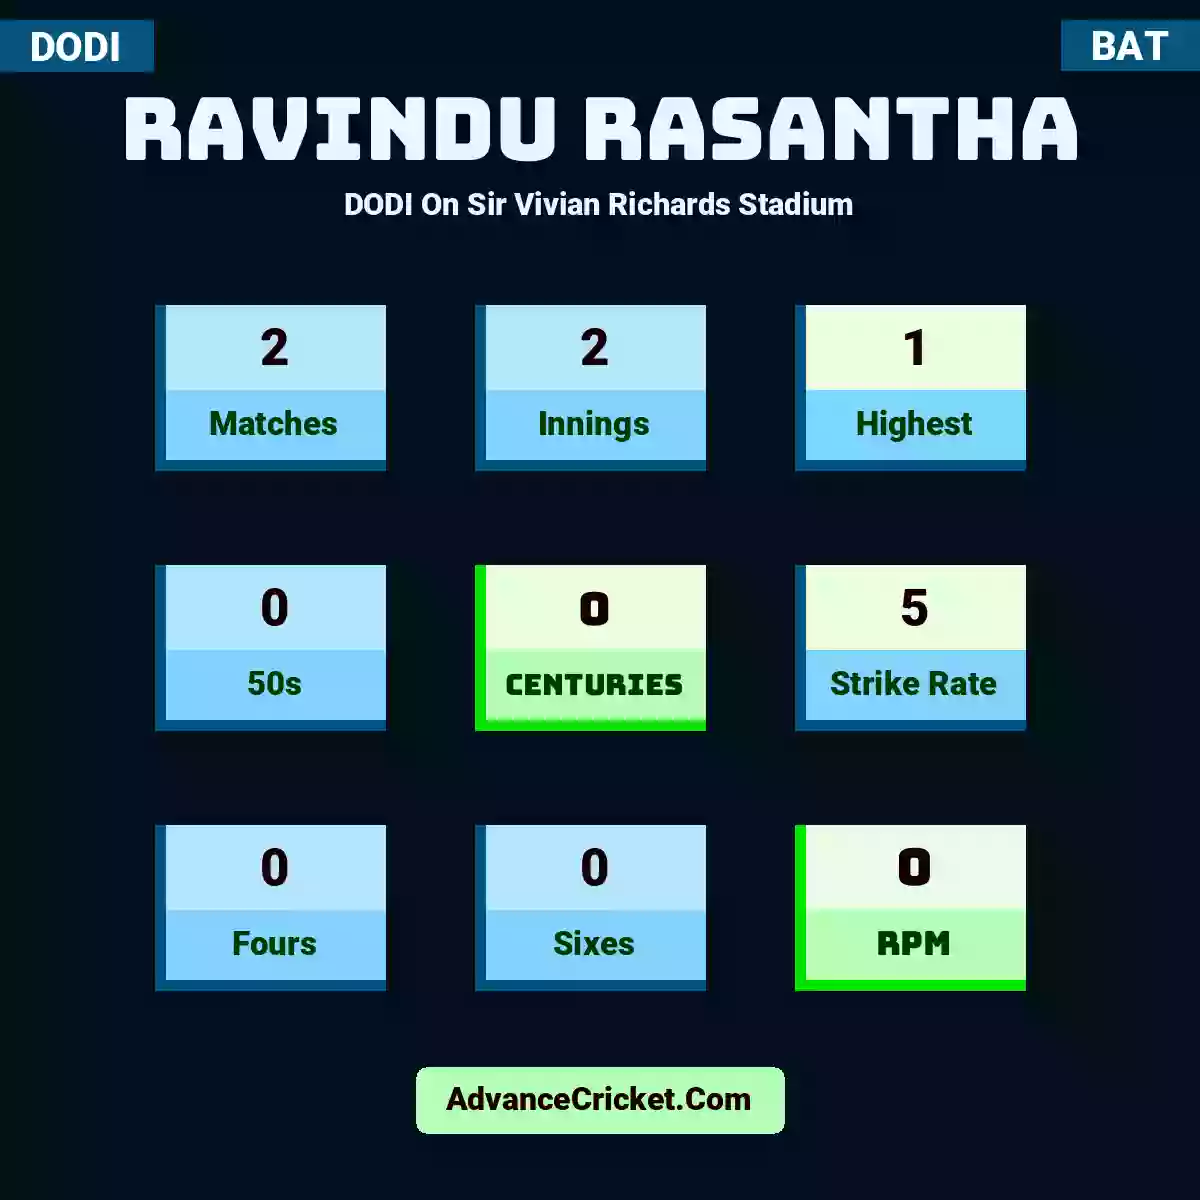 Ravindu Rasantha DODI  On Sir Vivian Richards Stadium, Ravindu Rasantha played 2 matches, scored 1 runs as highest, 0 half-centuries, and 0 centuries, with a strike rate of 5. R.Rasantha hit 0 fours and 0 sixes, with an RPM of 0.